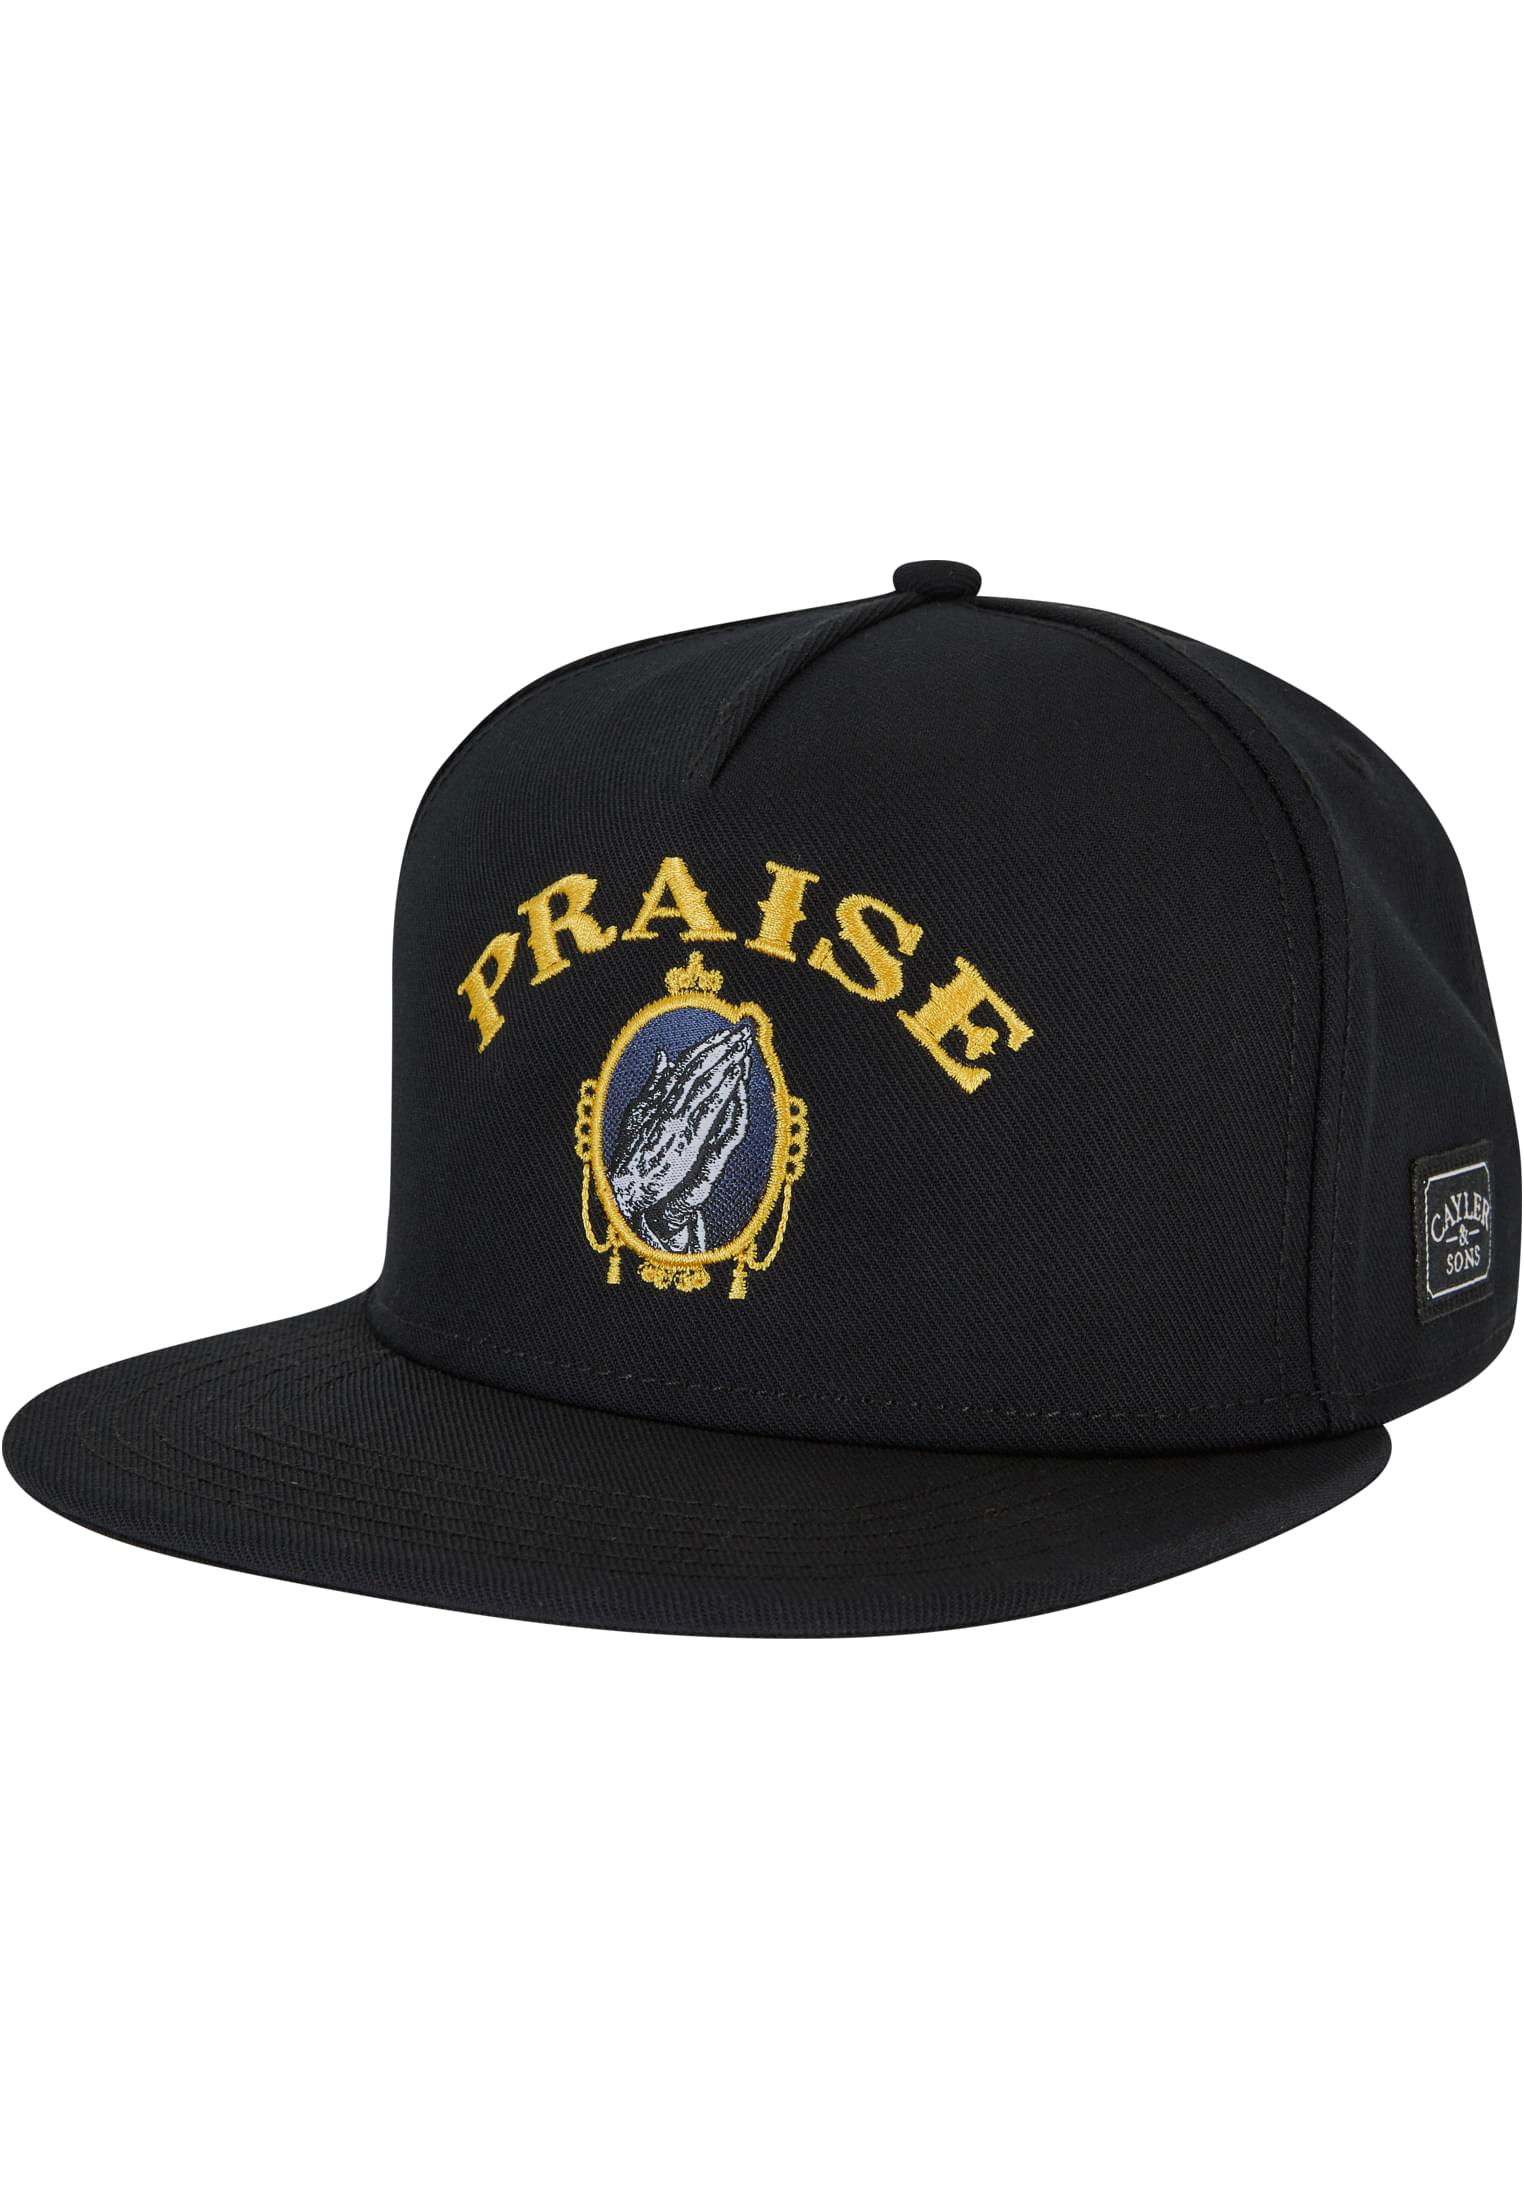 Praise the Chronic P Cap black one size